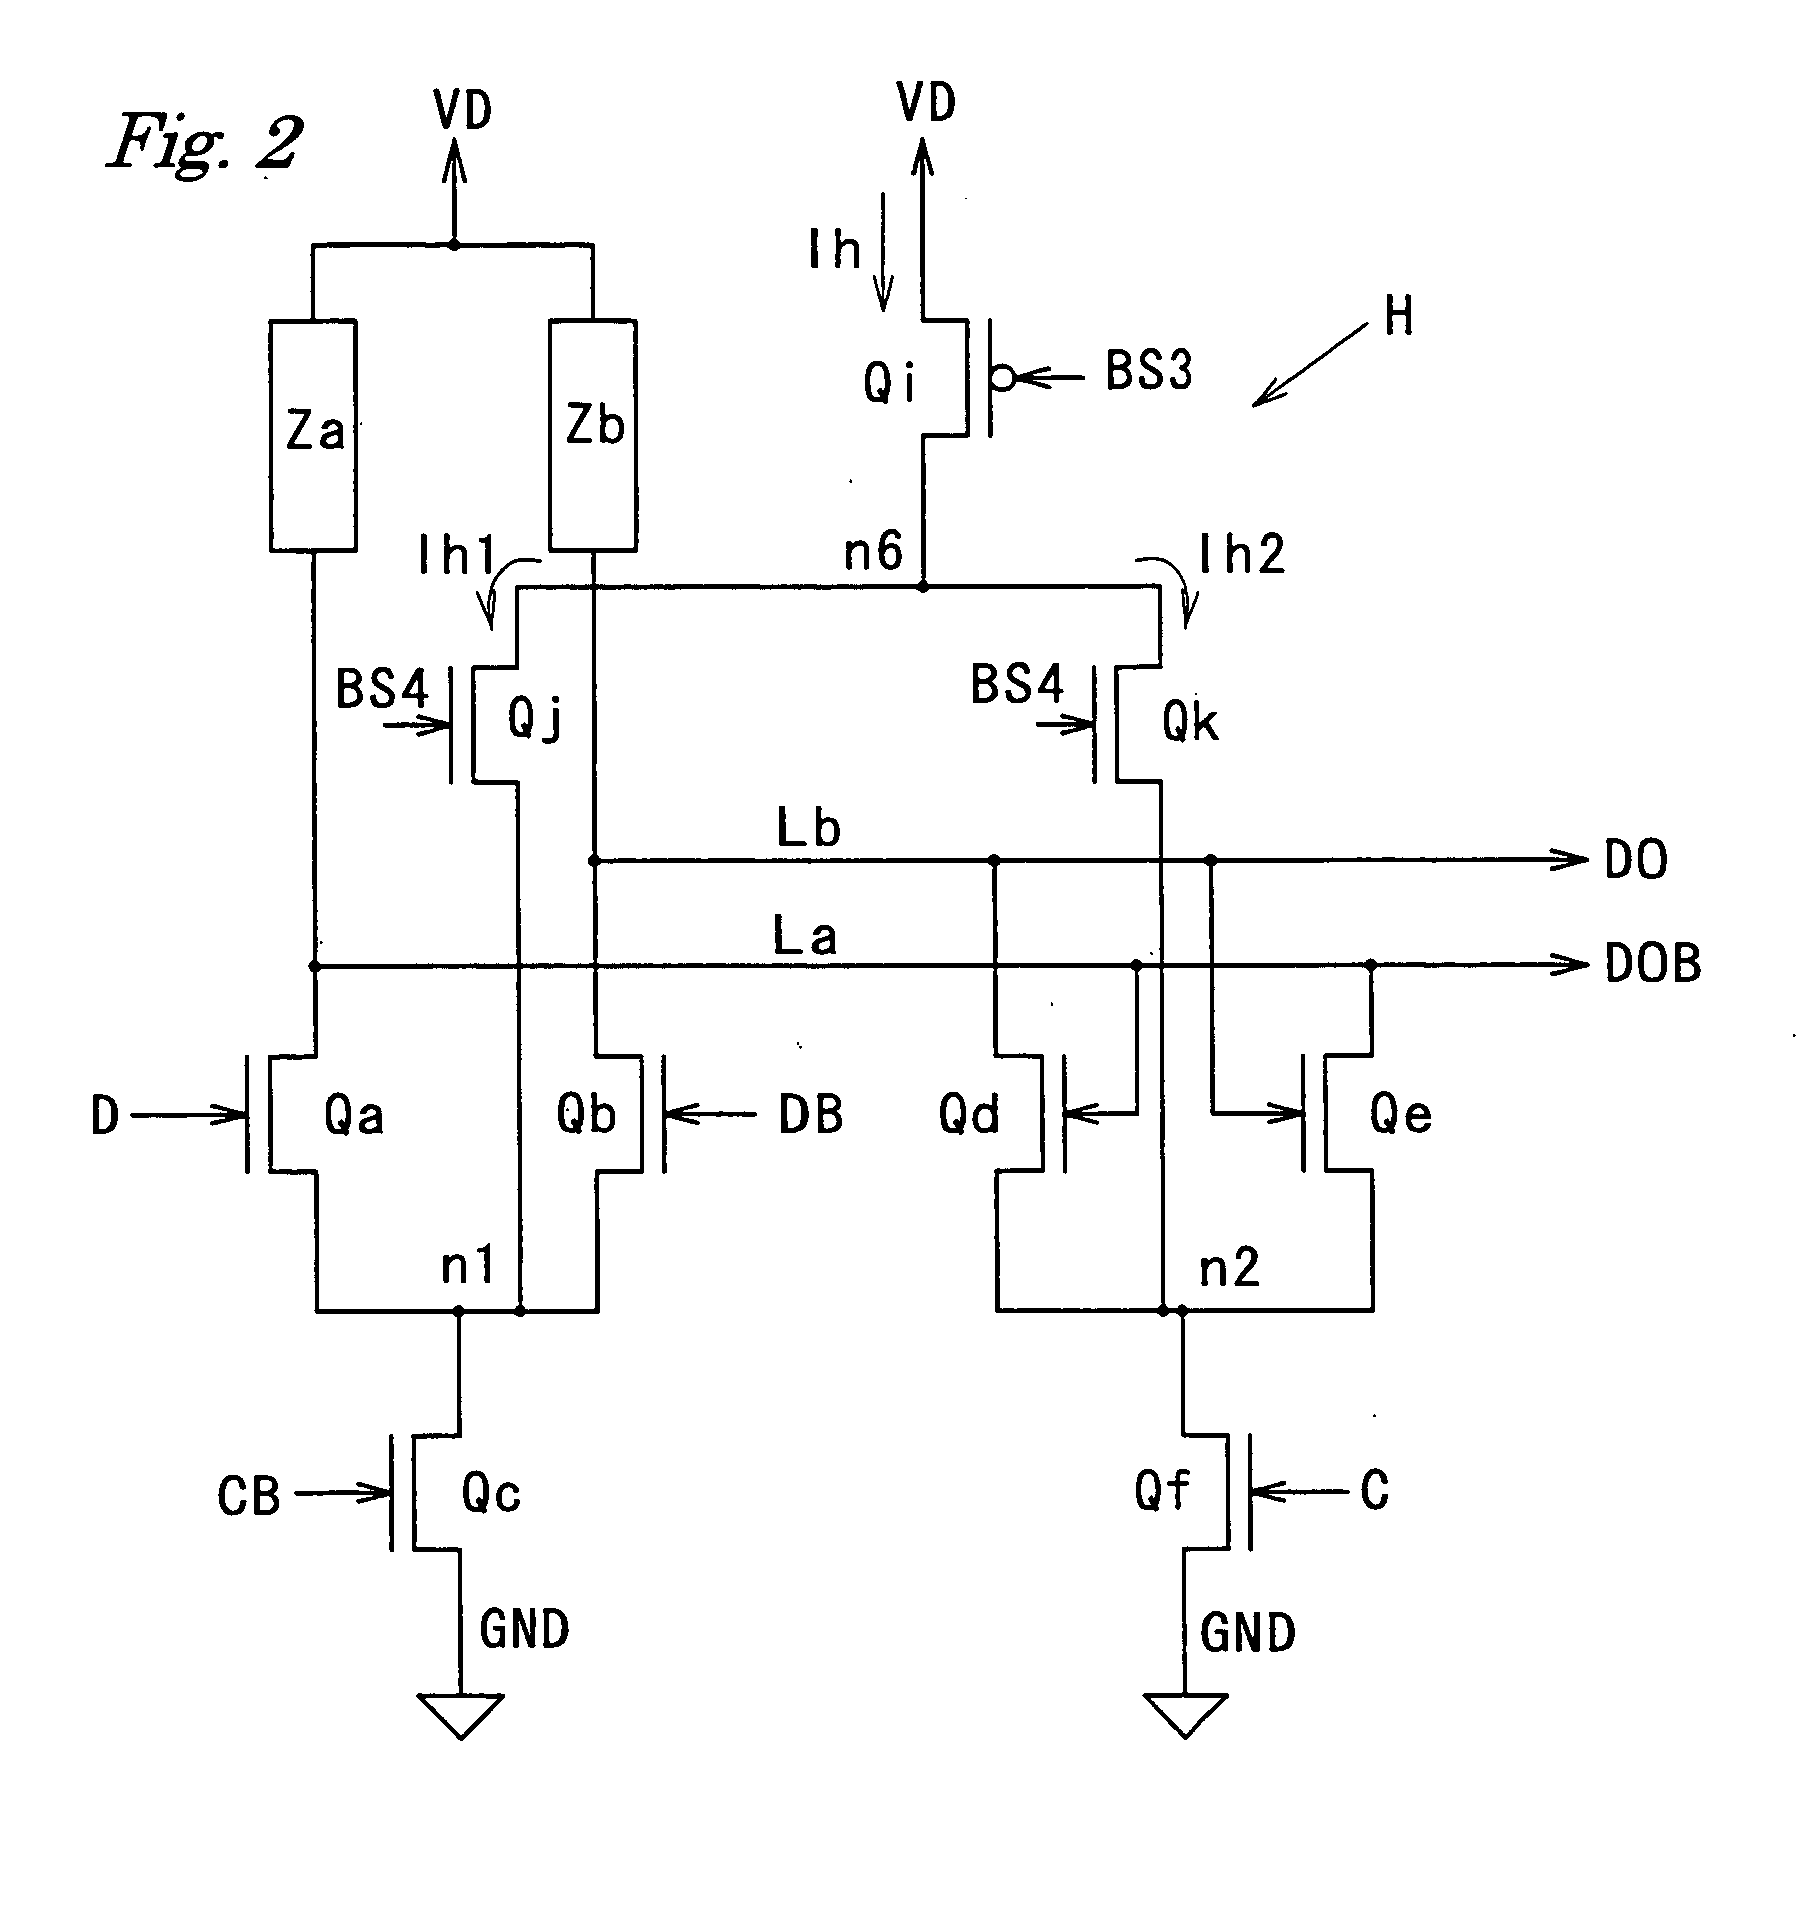 Current-mode logic circuit